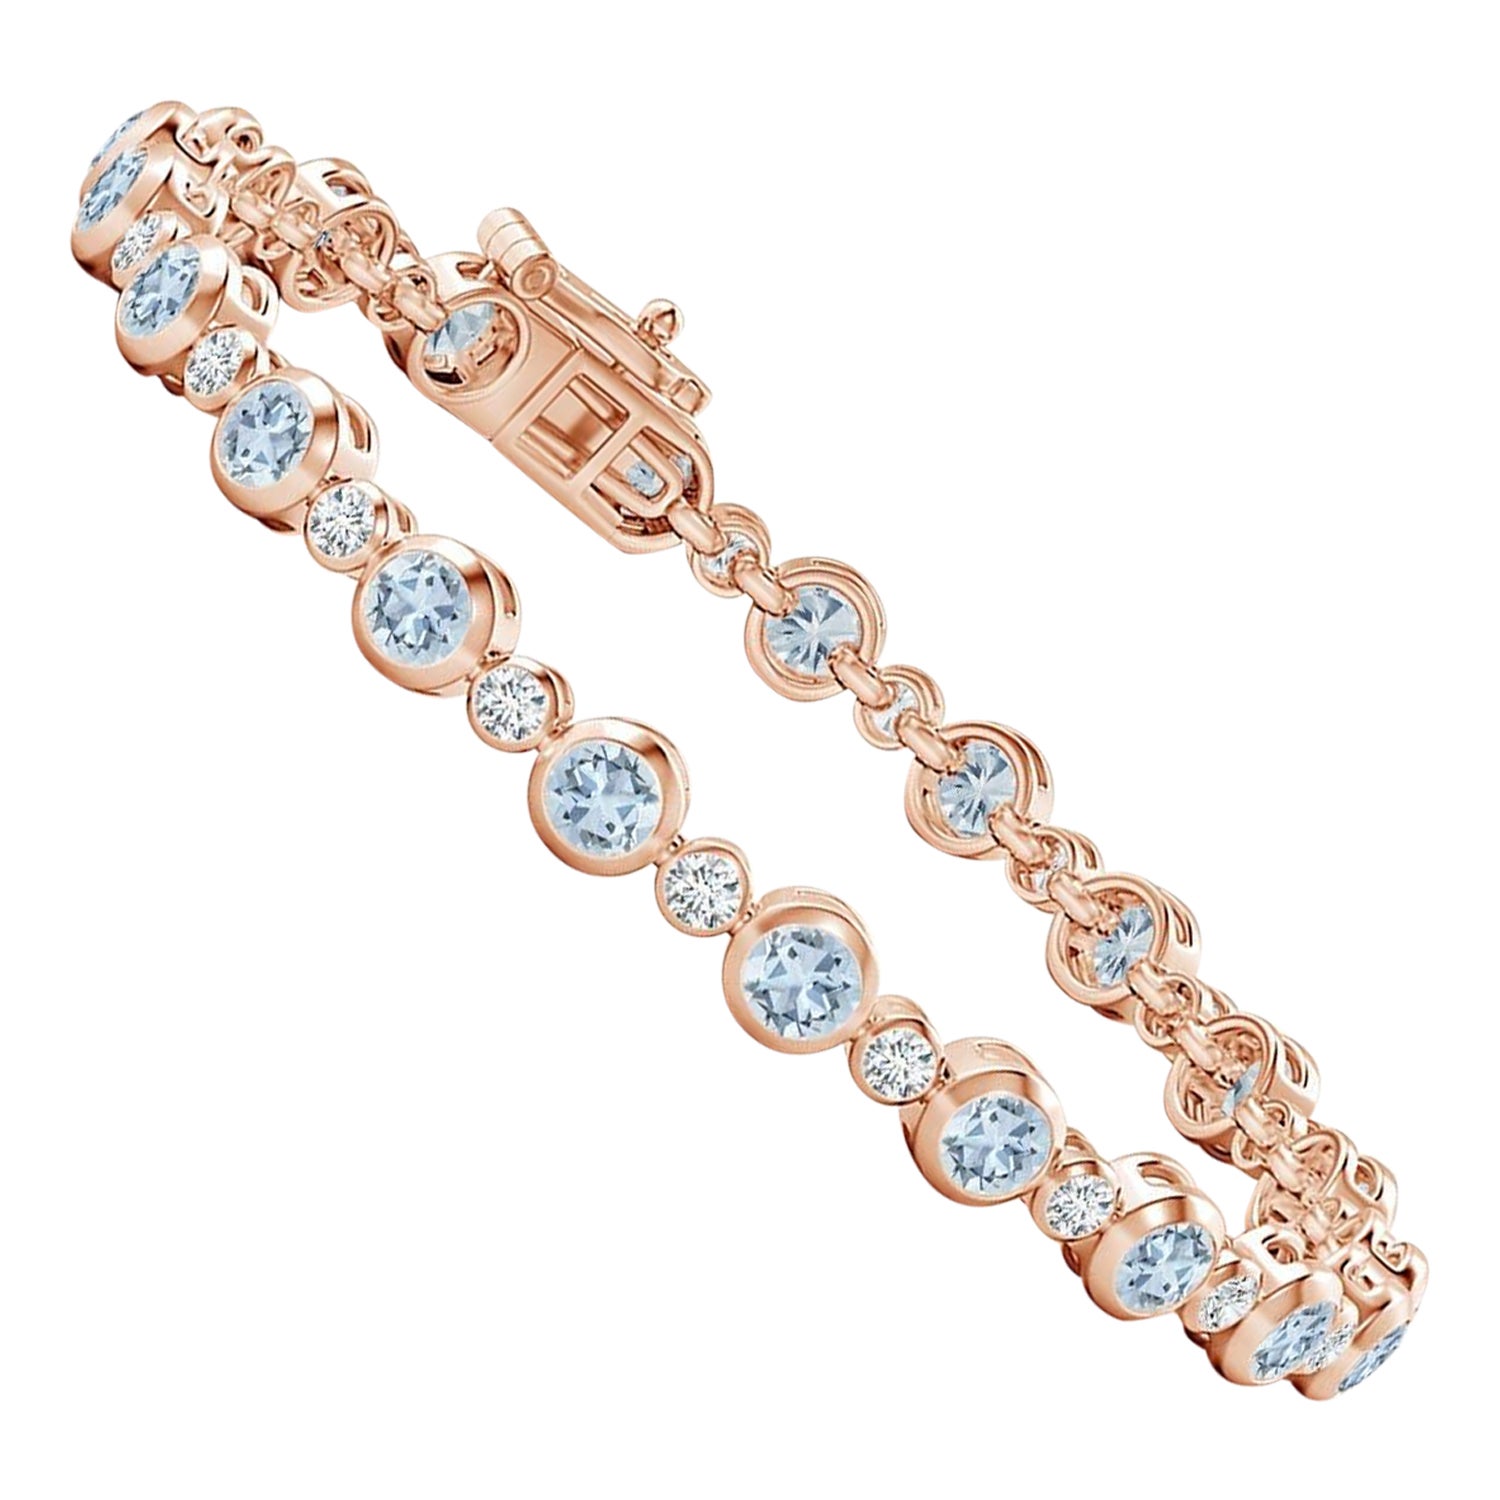 Bezel-Set 3.15ct Aquamarine and Diamond Tennis Bracelet in 14K Rose Gold